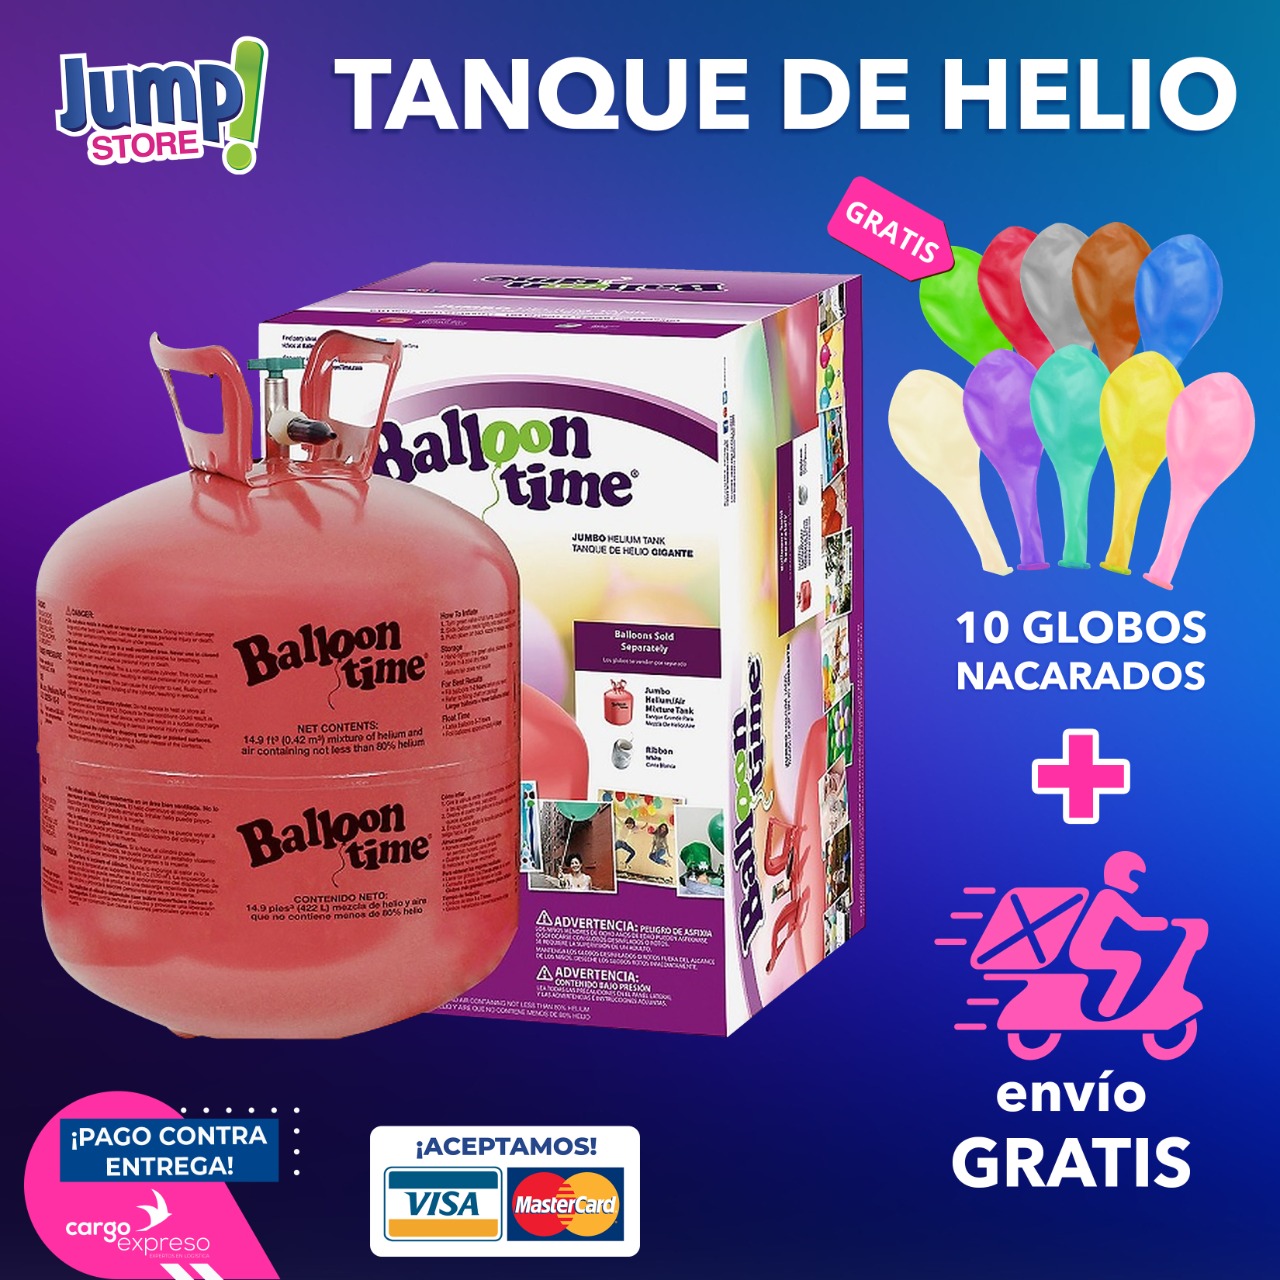 TANQUE DE HELIO – Jump Store